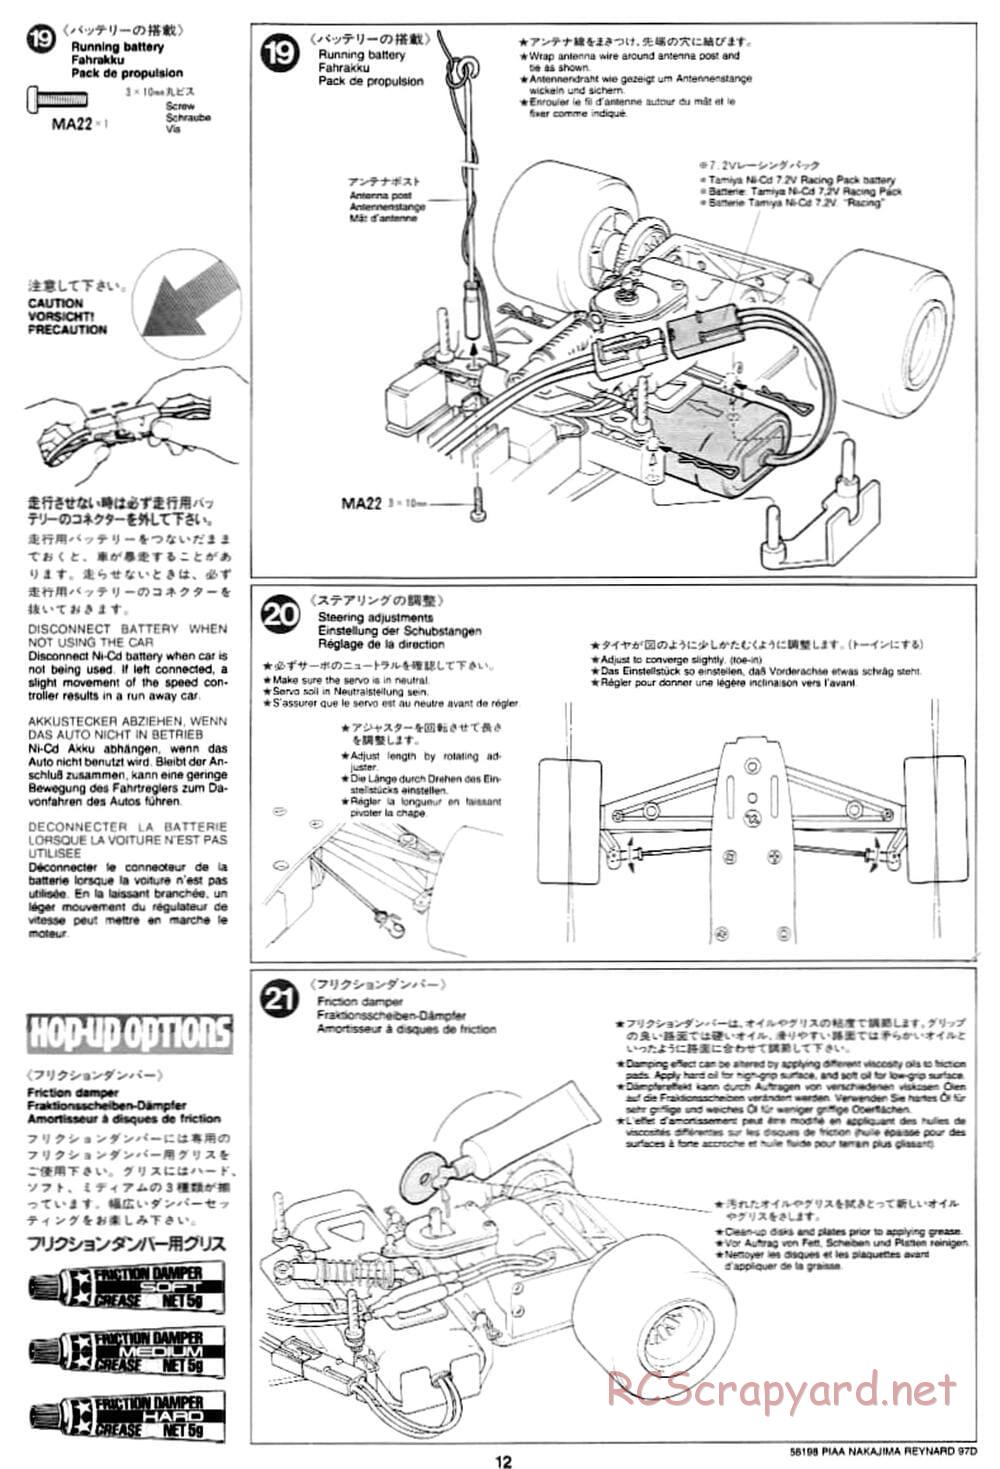 Tamiya - PIAA Nakajima Reynard 97D - F103 Chassis - Manuale - Page 12